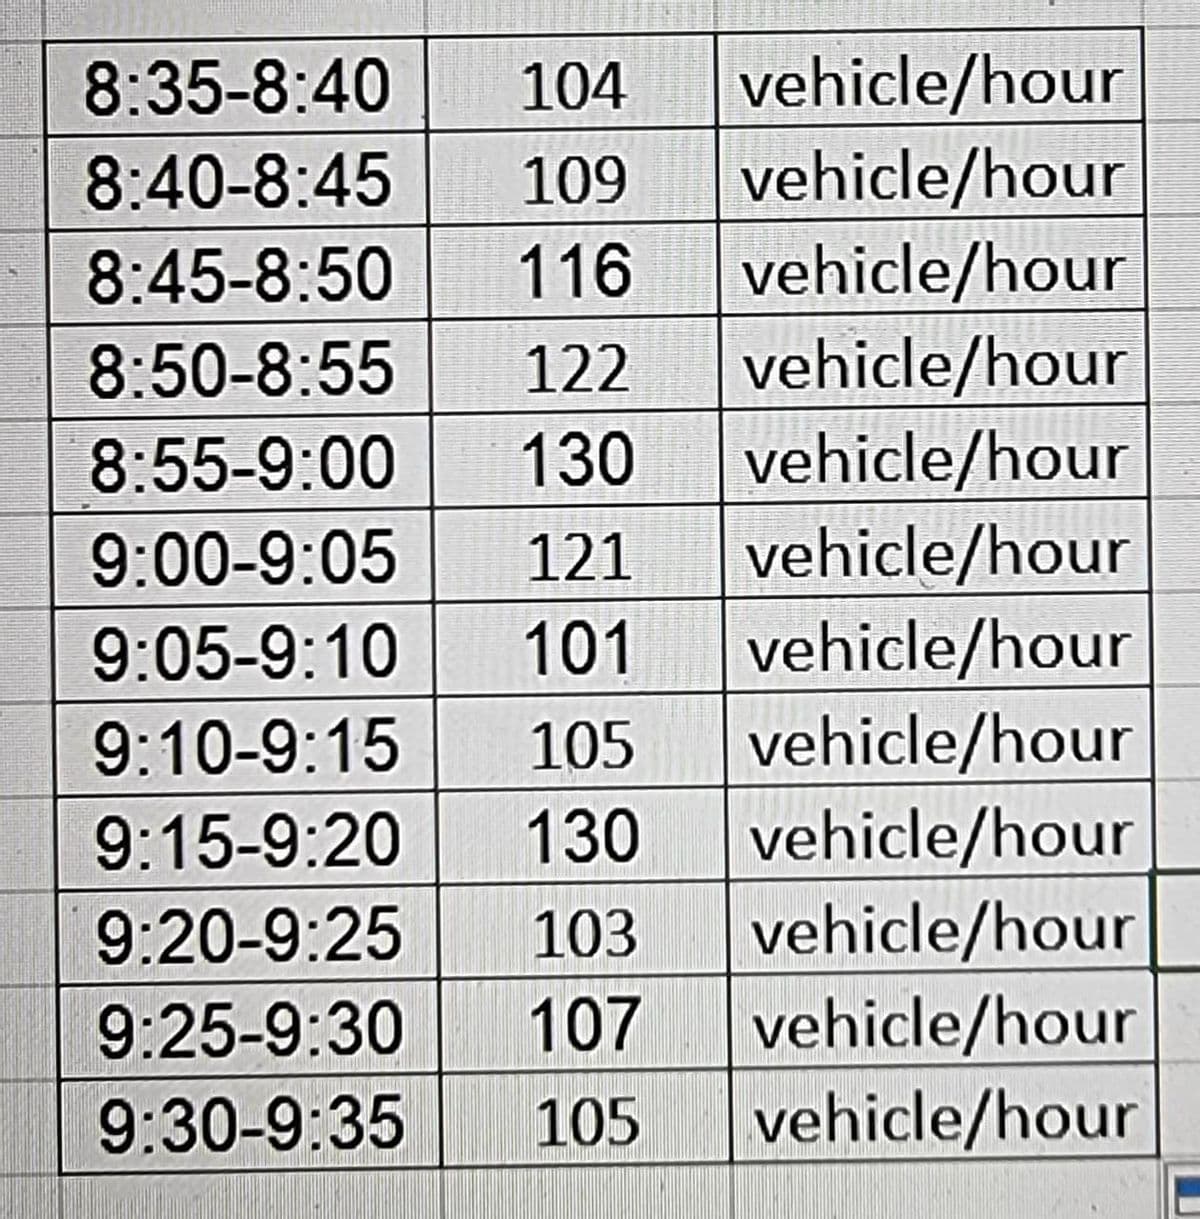 8:35-8:40
104
vehicle/hour
8:40-8:45
109
vehicle/hour
8:45-8:50
116
vehicle/hour
8:50-8:55
122
vehicle/hour
8:55-9:00
130
vehicle/hour
9:00-9:05
121
vehicle/hour
vehicle/hour
vehicle/hour
vehicle/hour
vehicle/hour
vehicle/hour
vehicle/hour
9:05-9:10
101
9:10-9:15
105
9:15-9:20
130
9:20-9:25
103
9:25-9:30
107
9:30-9:35
105
